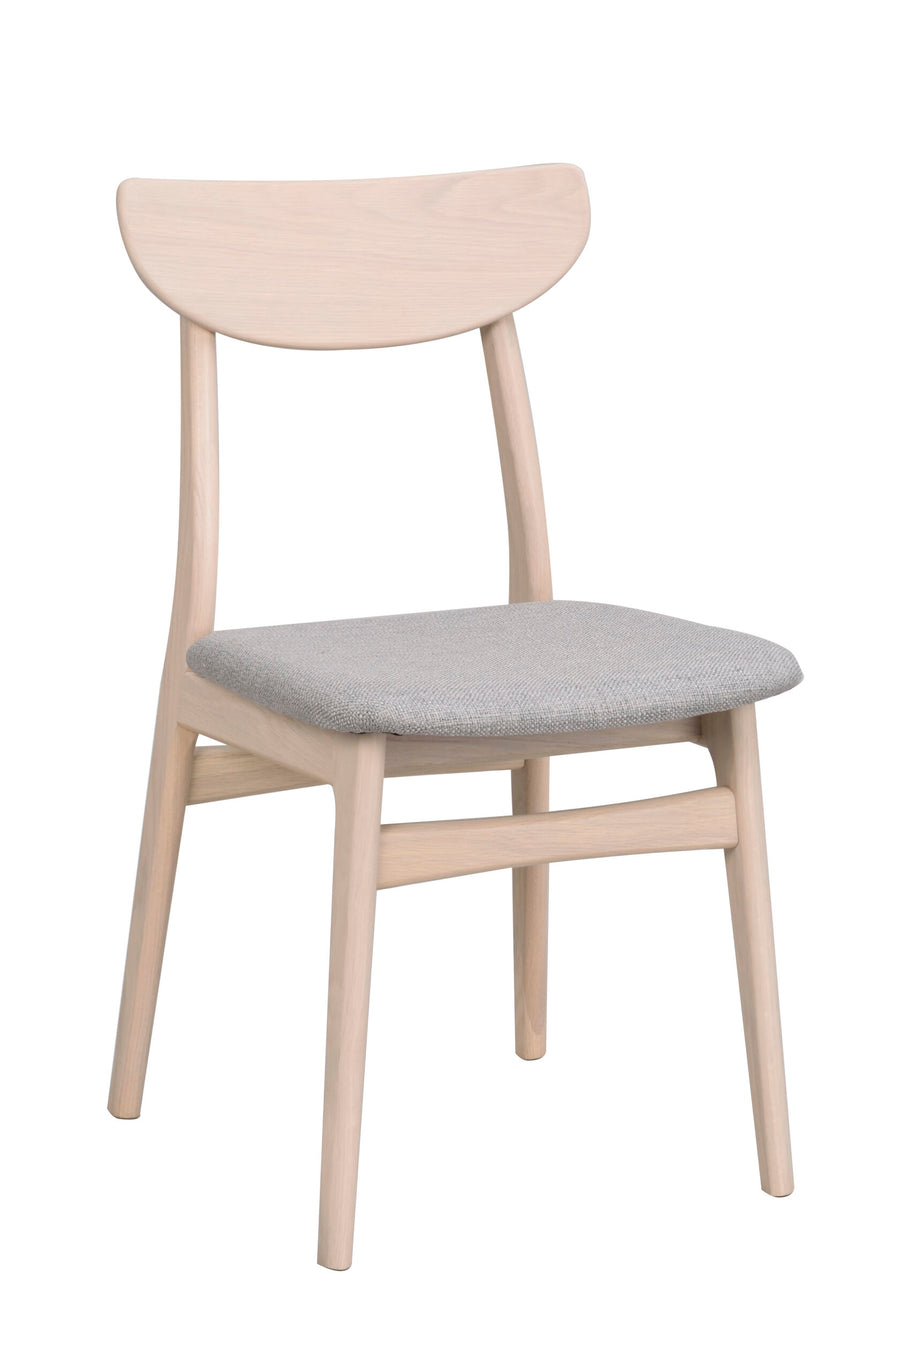 120066_b, Rodham chair, whitepigm. oak_grey